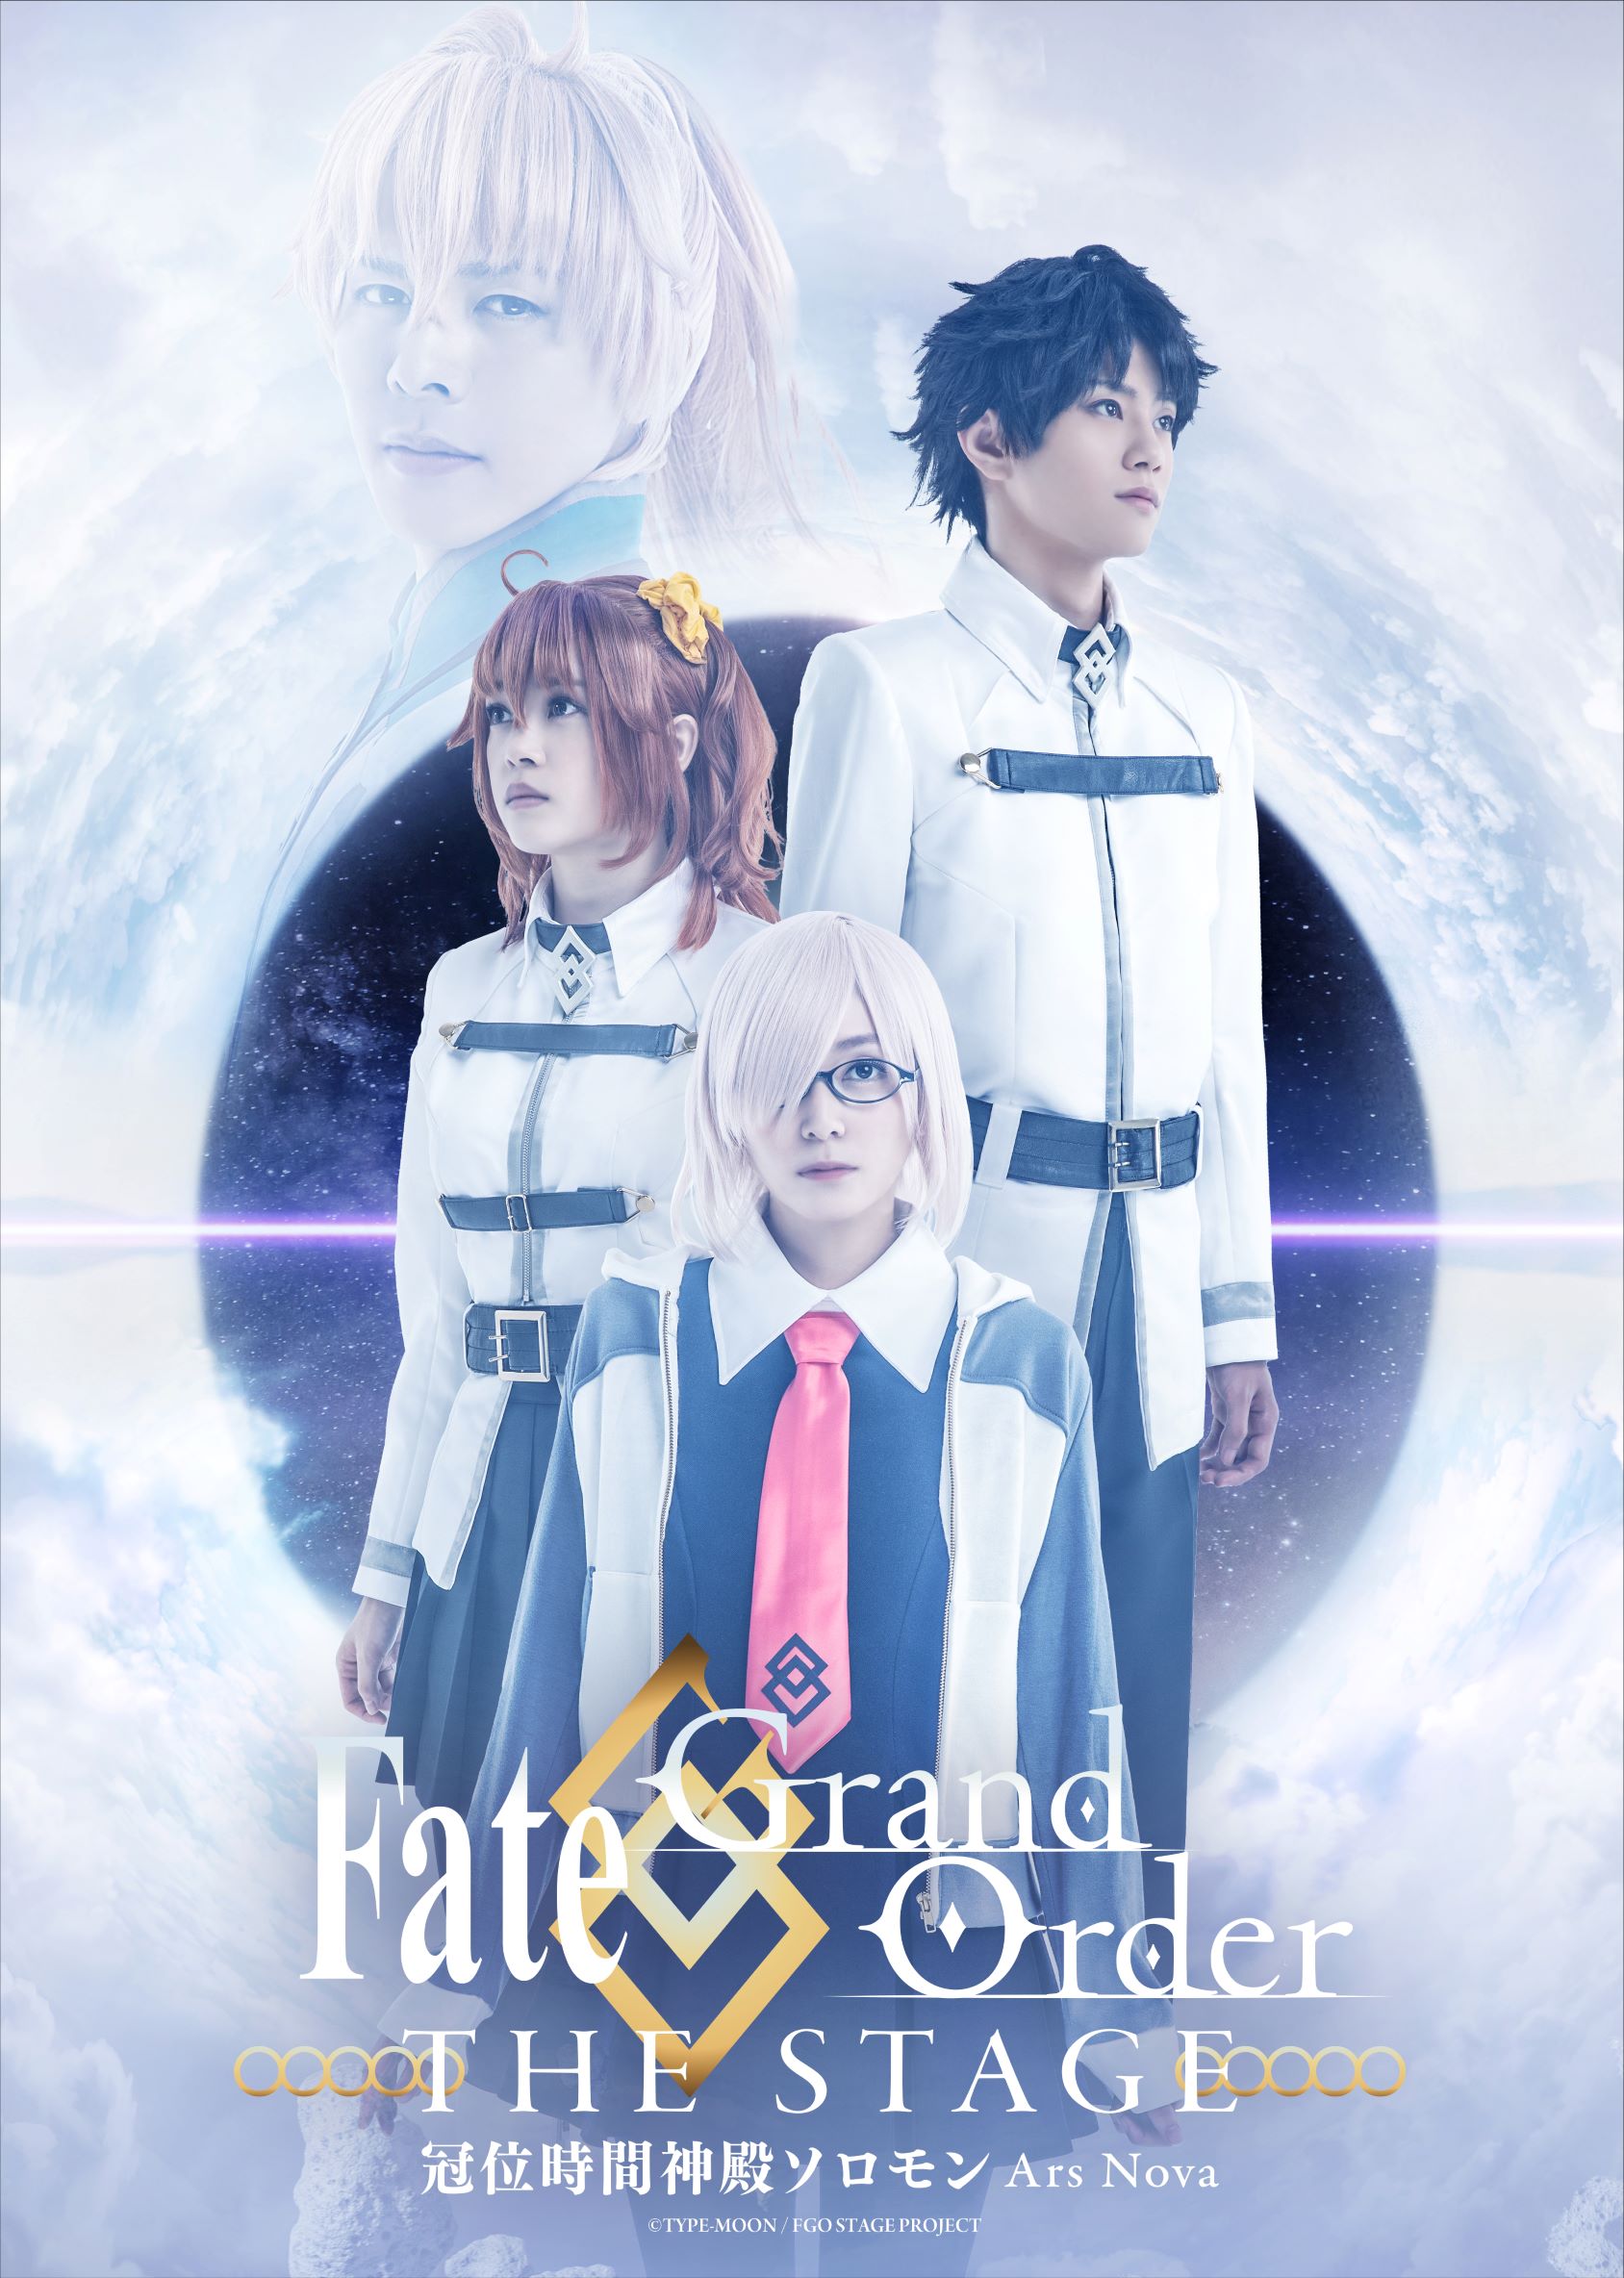 Fate Grand Order The Stage 冠位時間神殿ソロモン ティザービジュアル チケットスケジュール到着 株式会社アニプレックスのプレスリリース